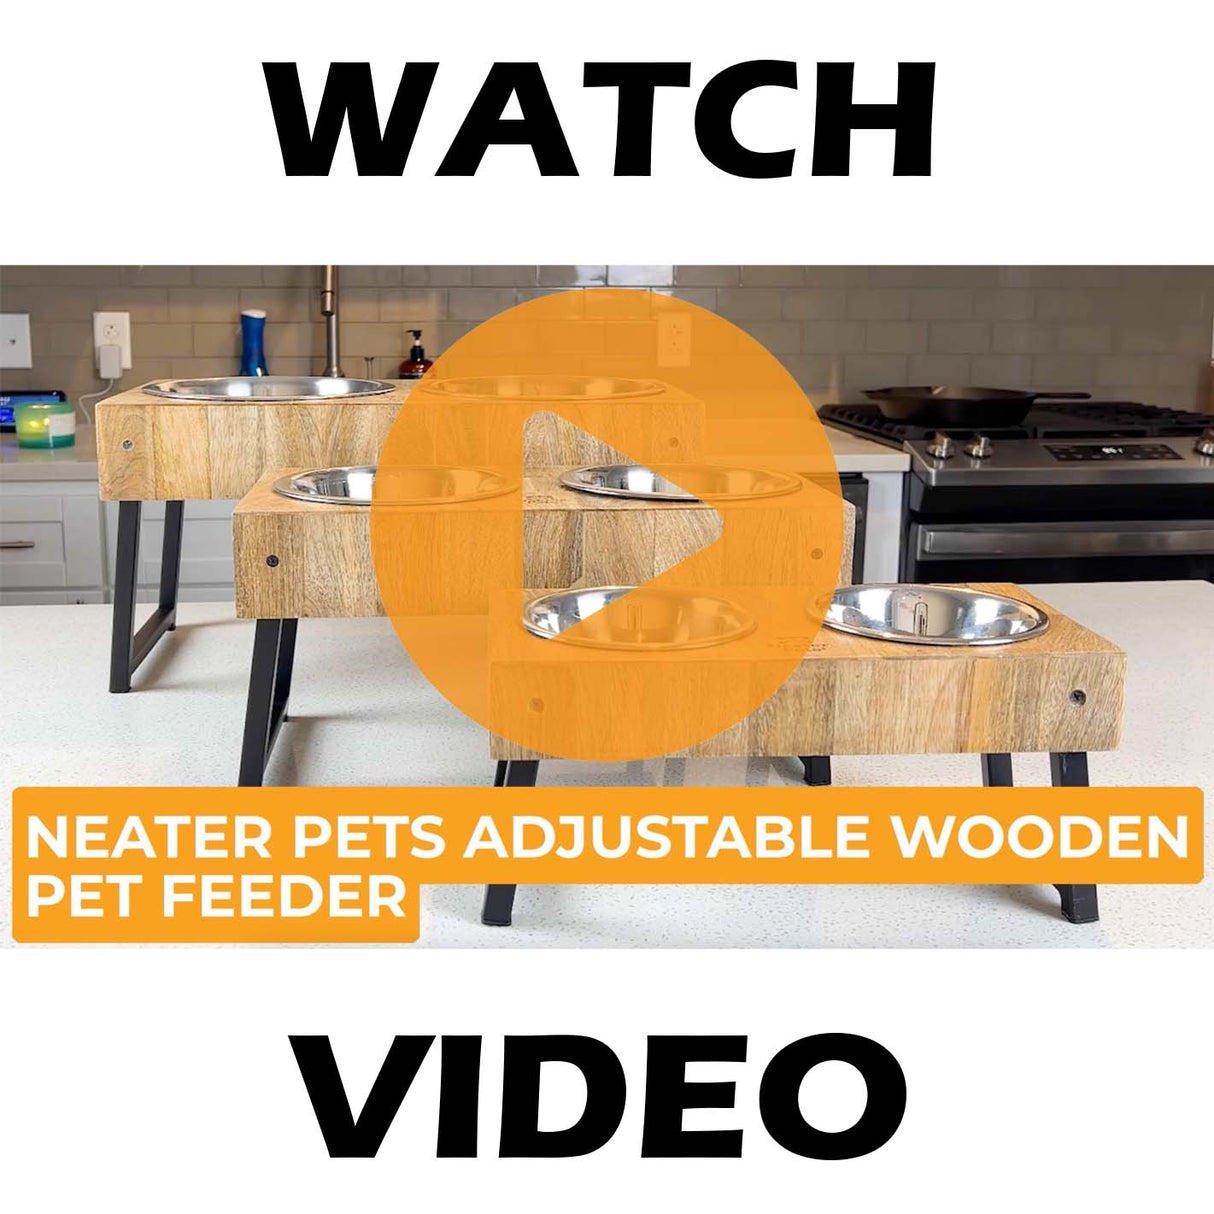 Adjustable Wooden Feeder video